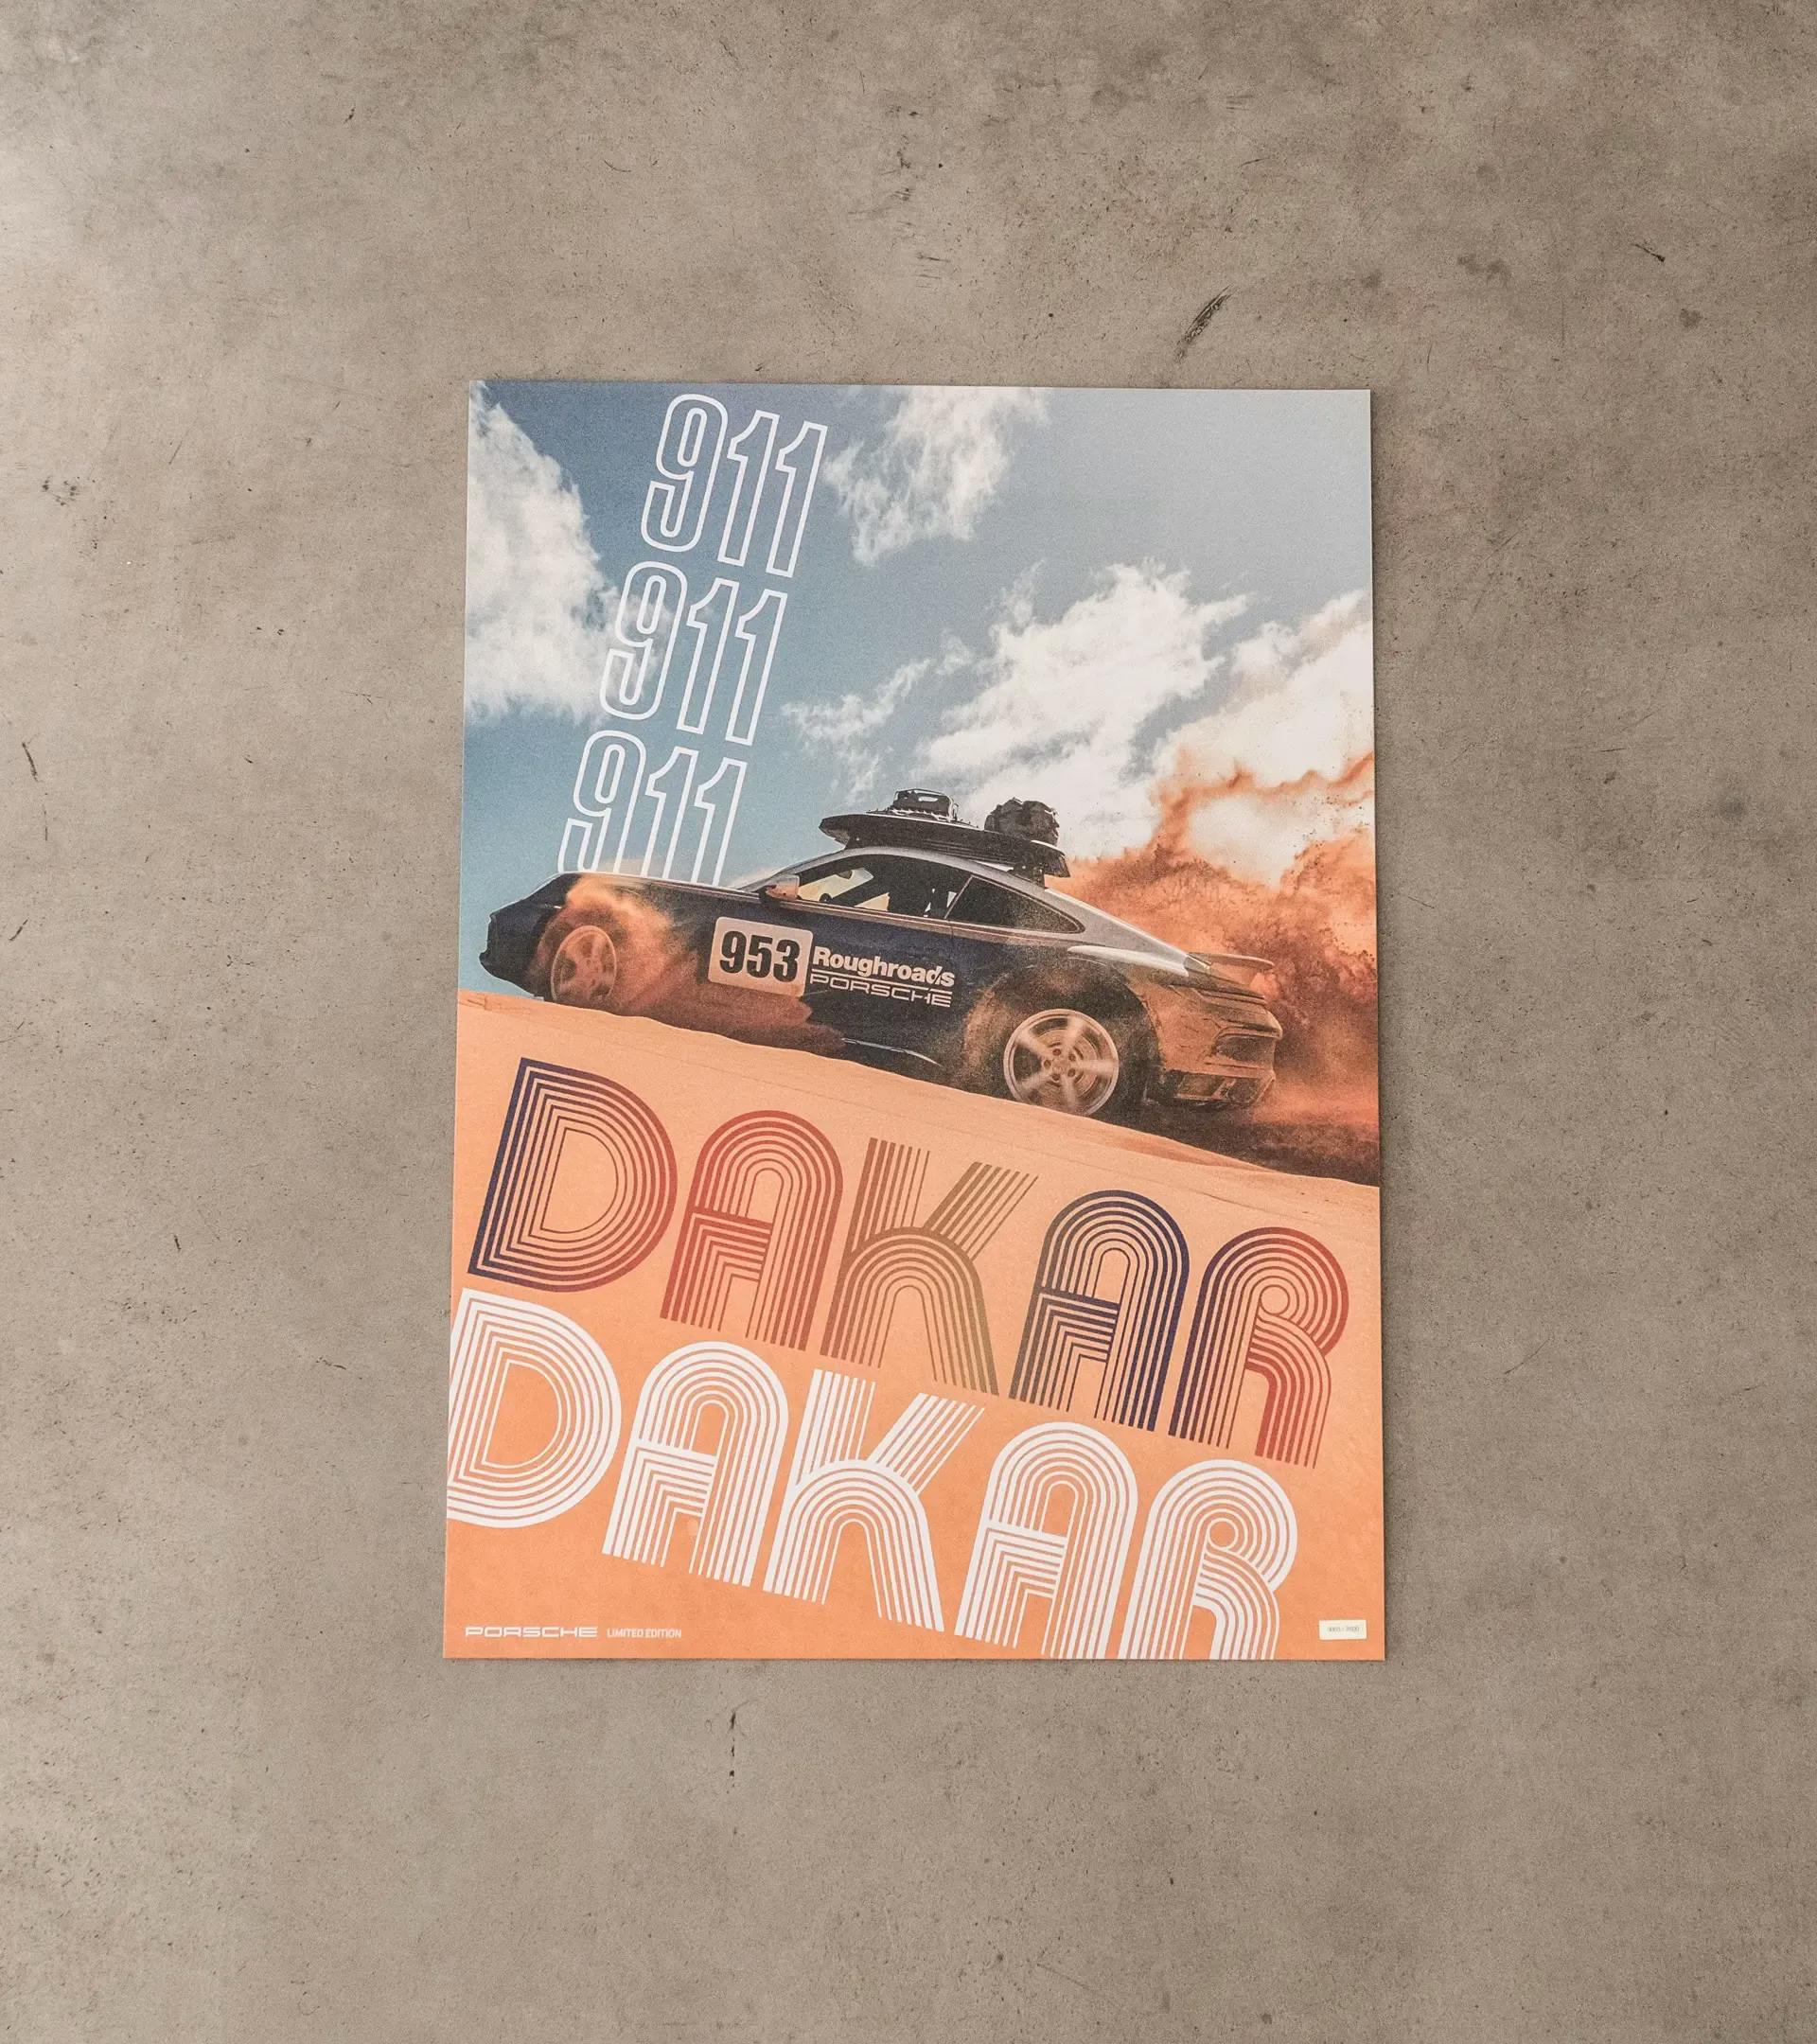  Auto-Poster Porsche 911 Dakar Racing Car Poster Dekorative  Malerei Leinwand Wandposter und Kunstbild Druck Moderne Familie  Schlafzimmer Dekor Poster 60 x 90 cm